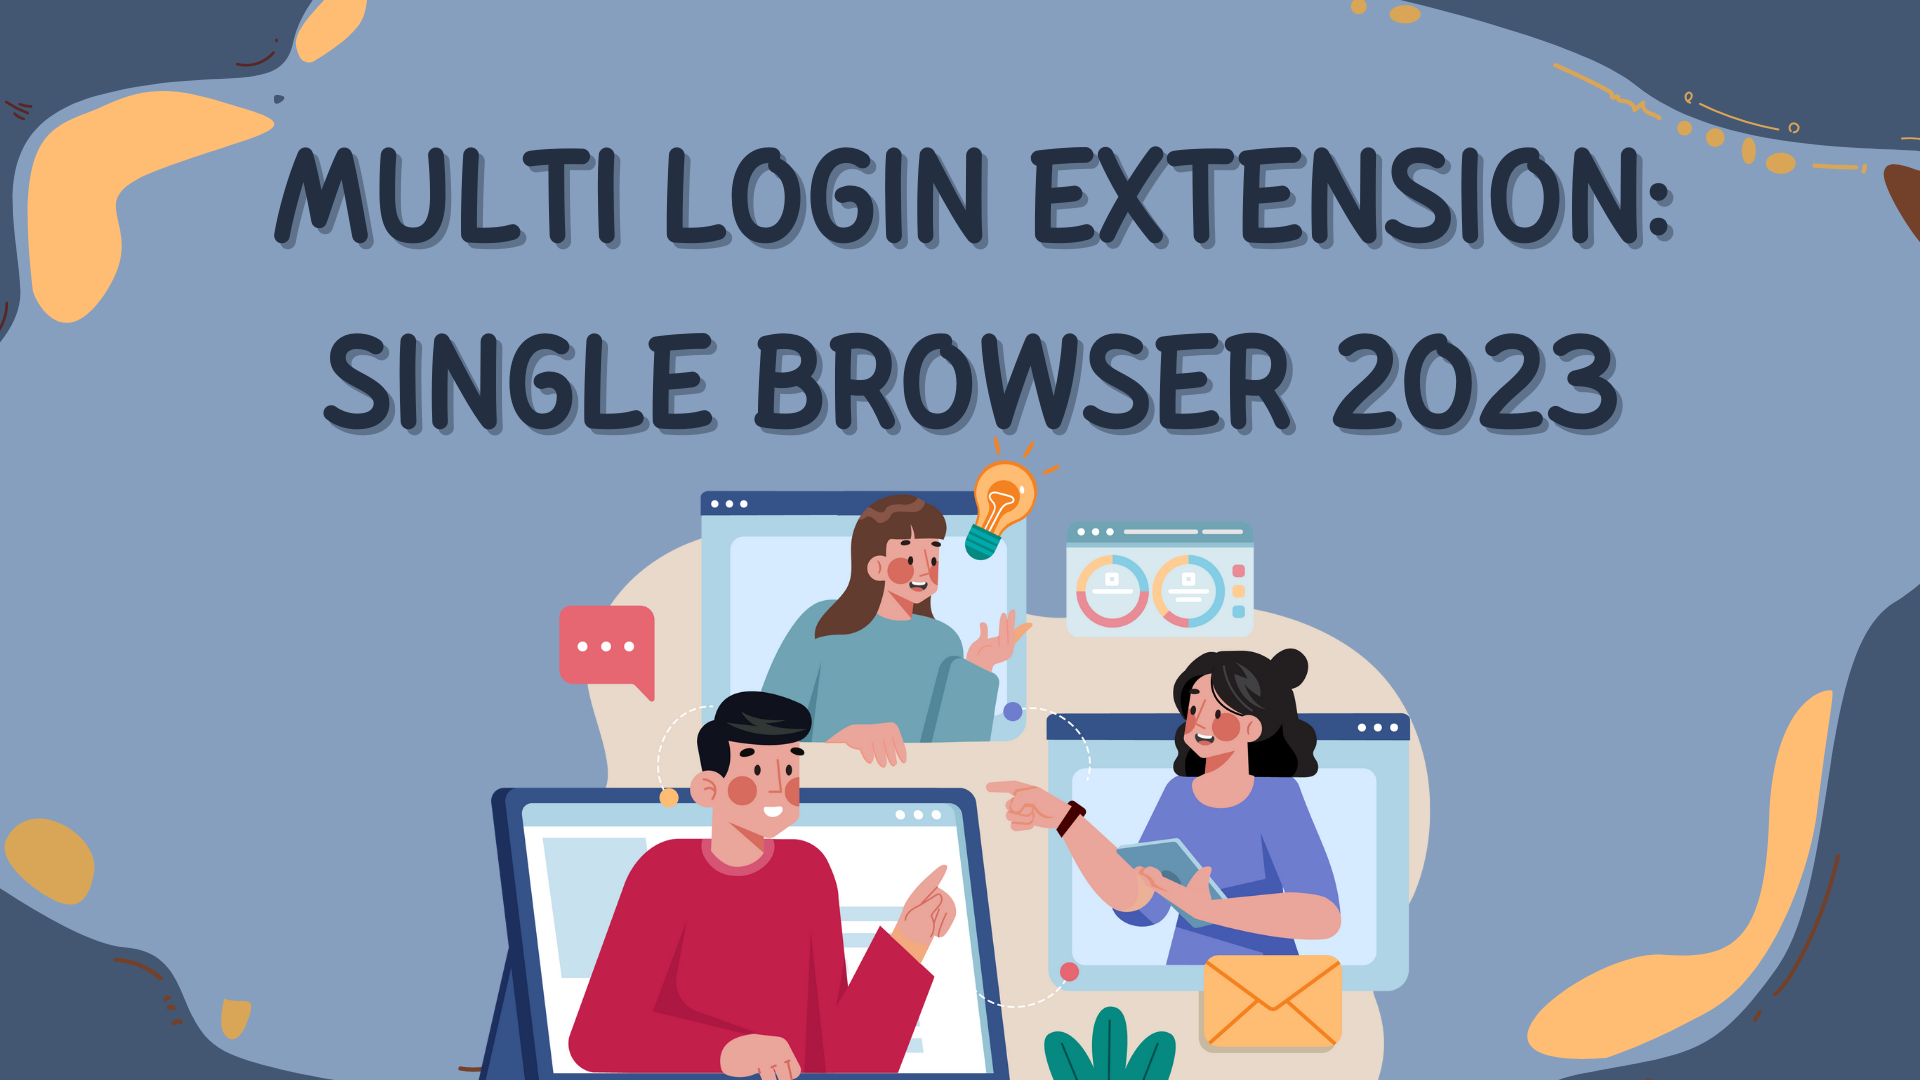 Multi login extension: Single browser 2023